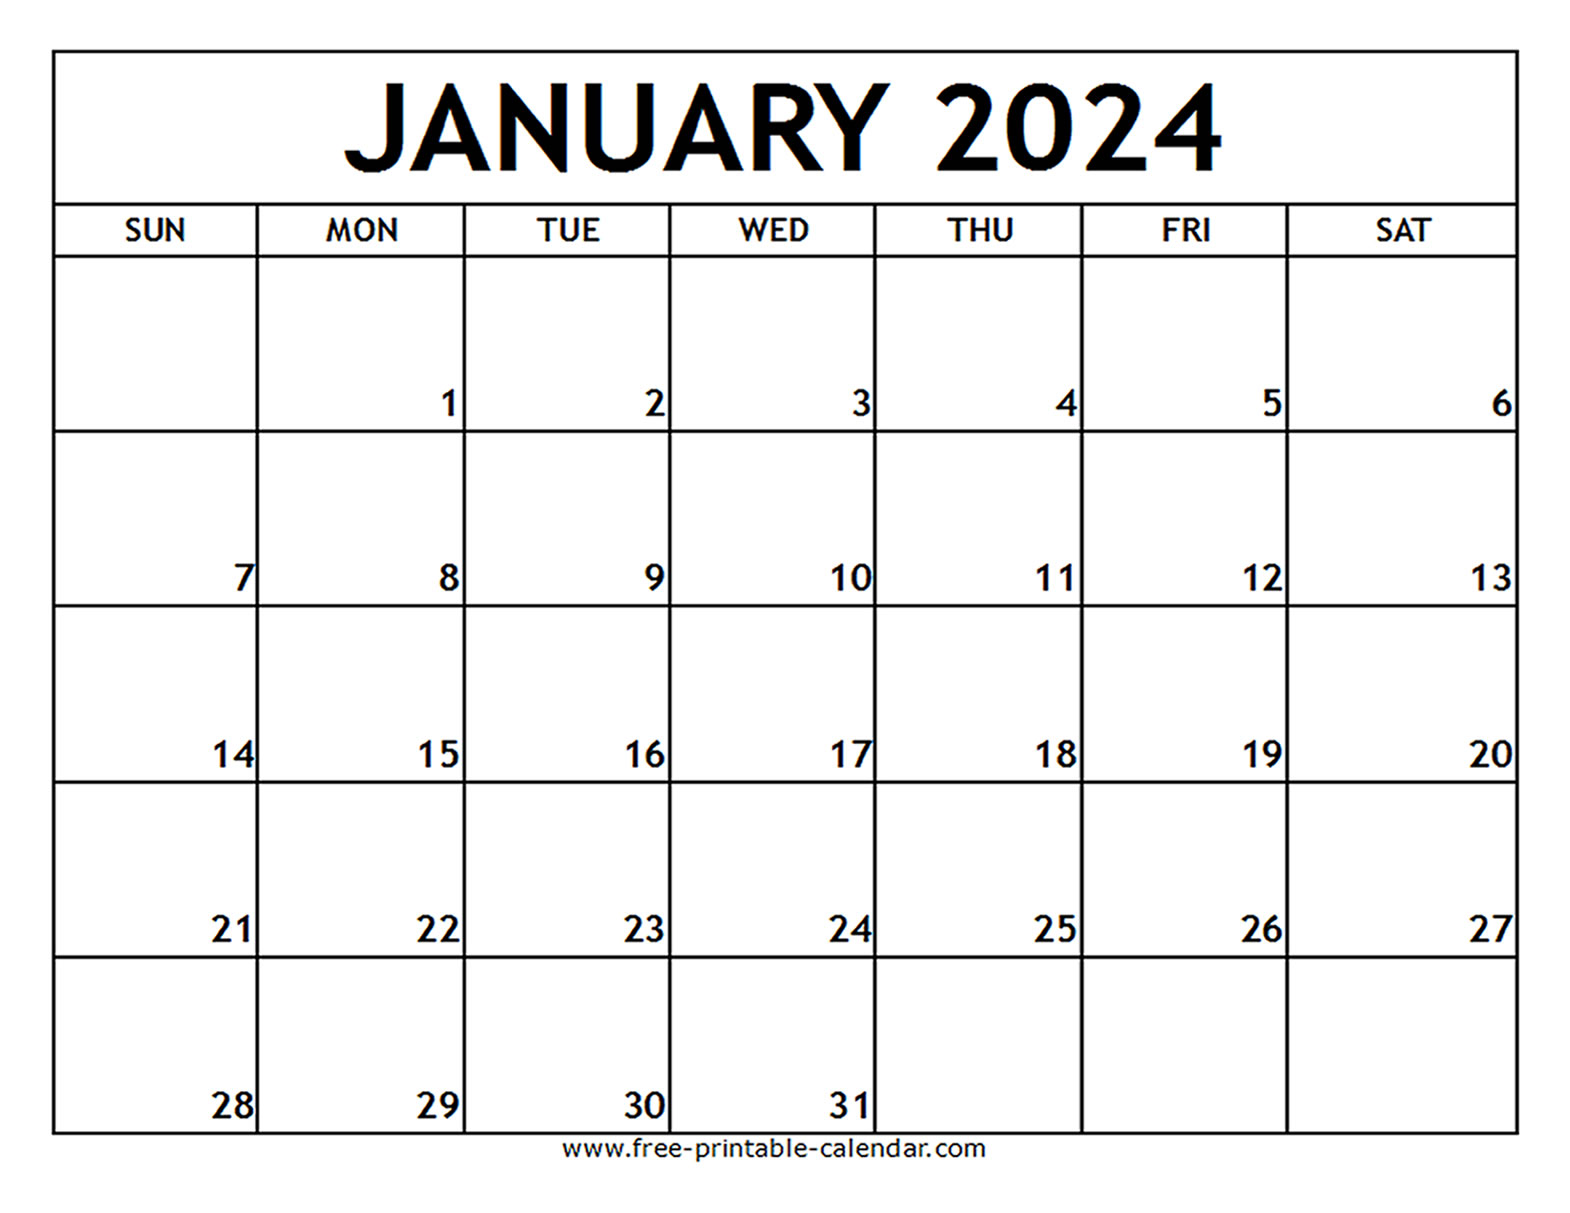 January 2024 Printable Calendar Free printable calendar